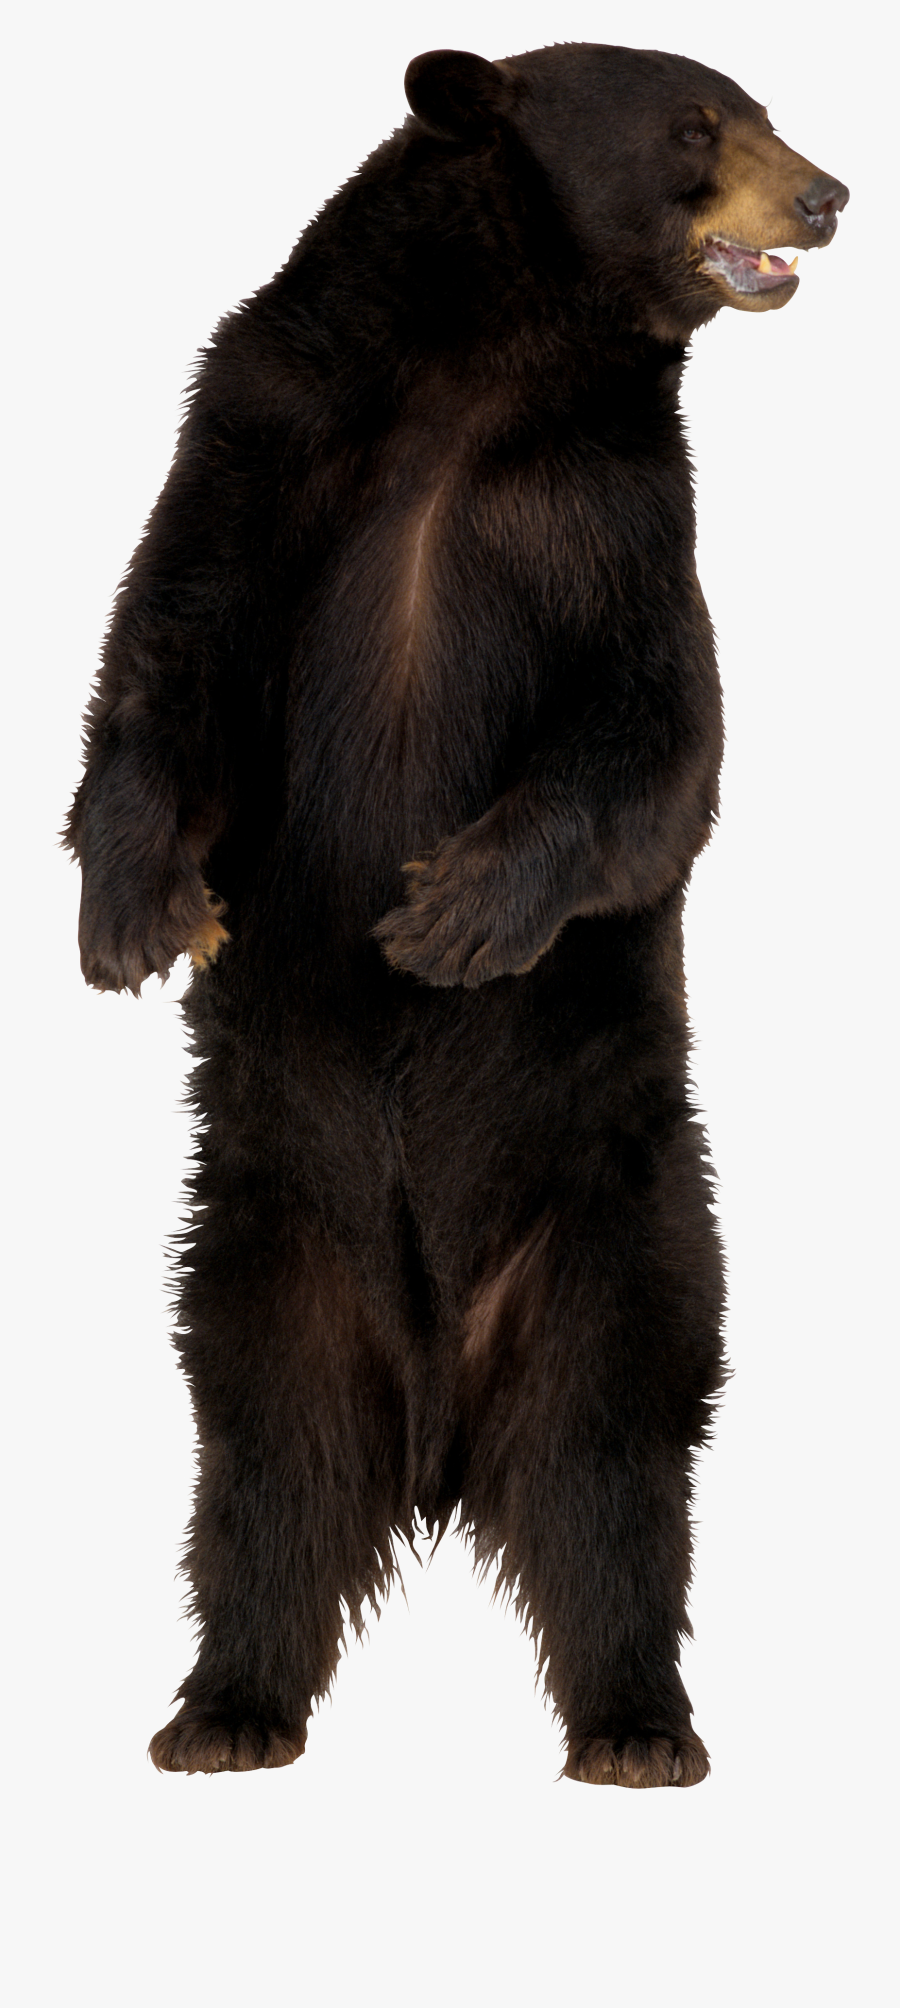 Bear Clipart Transparent Background - Bear Png, Transparent Clipart